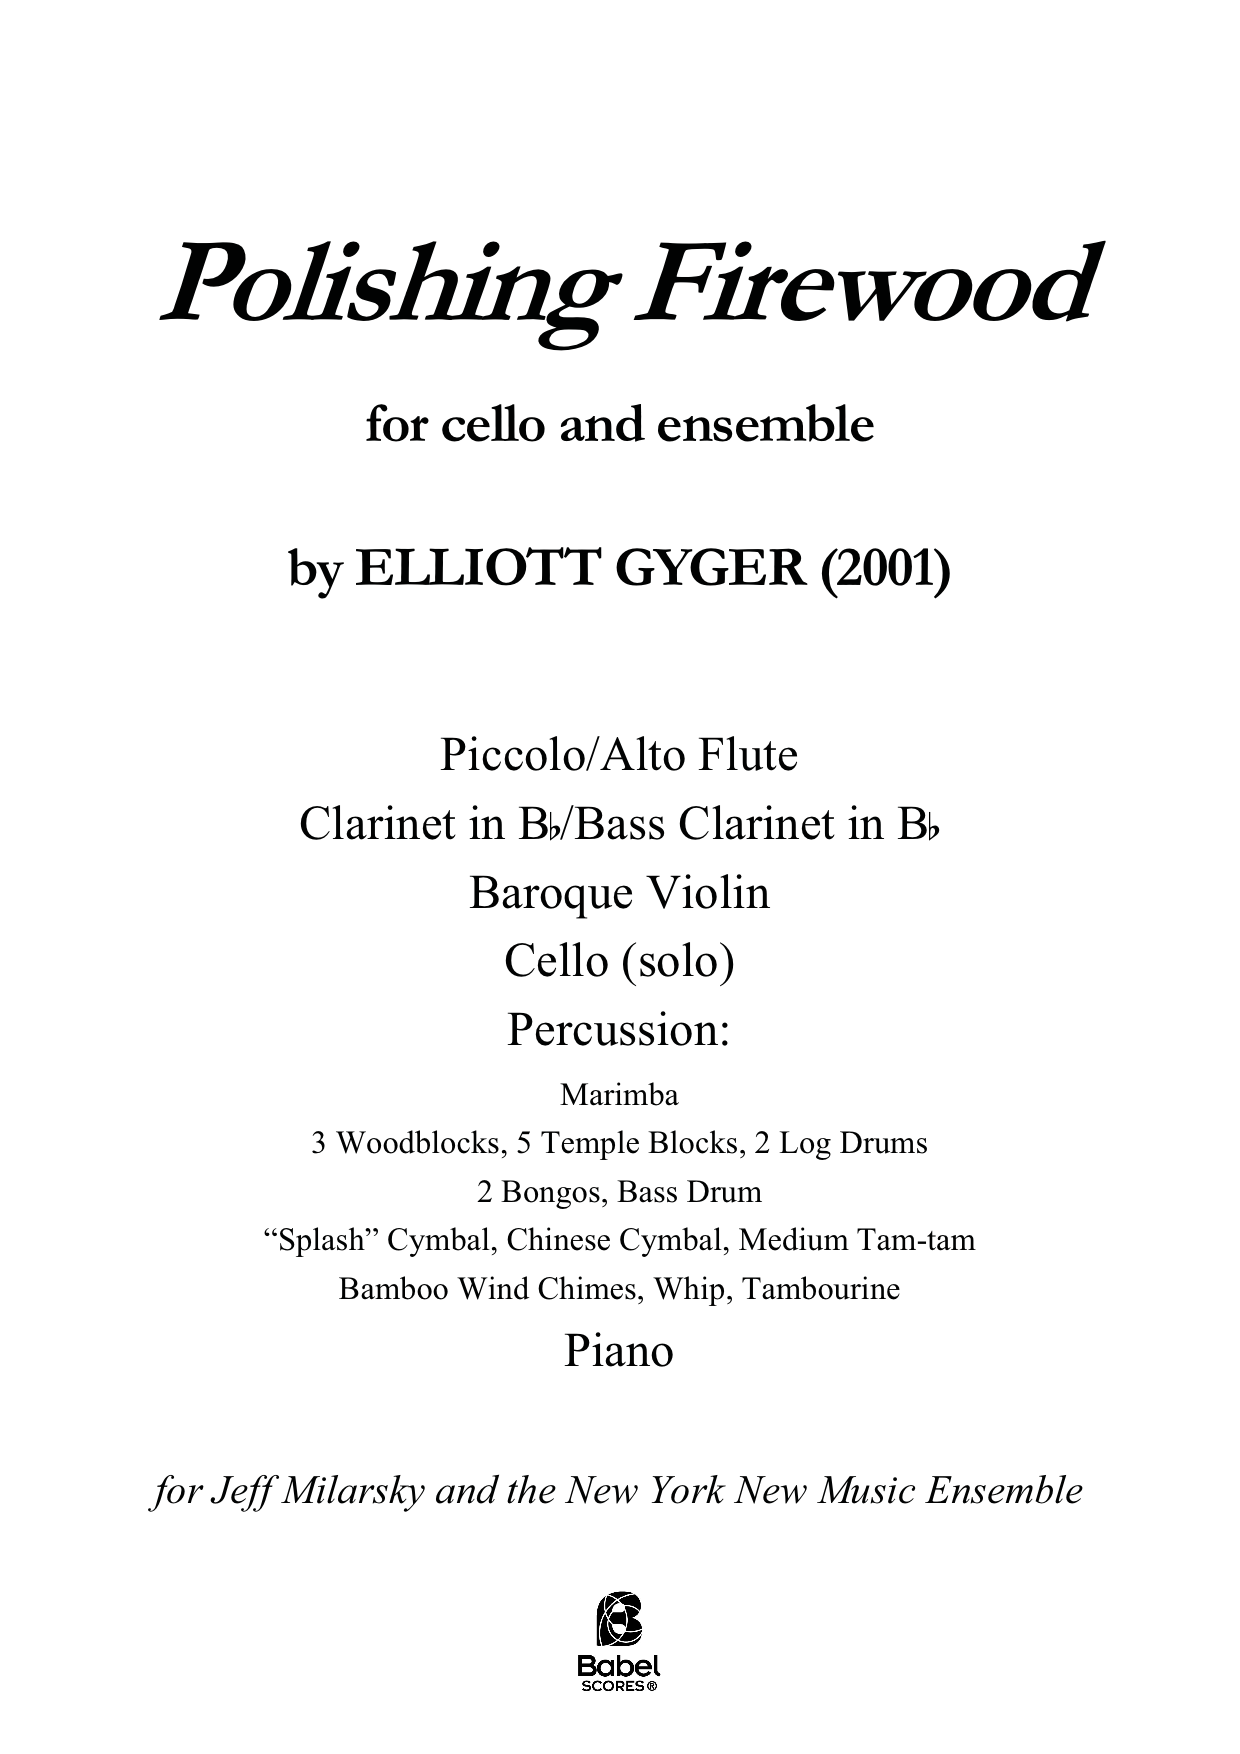 polishingfirewood A4 z 2 1 545